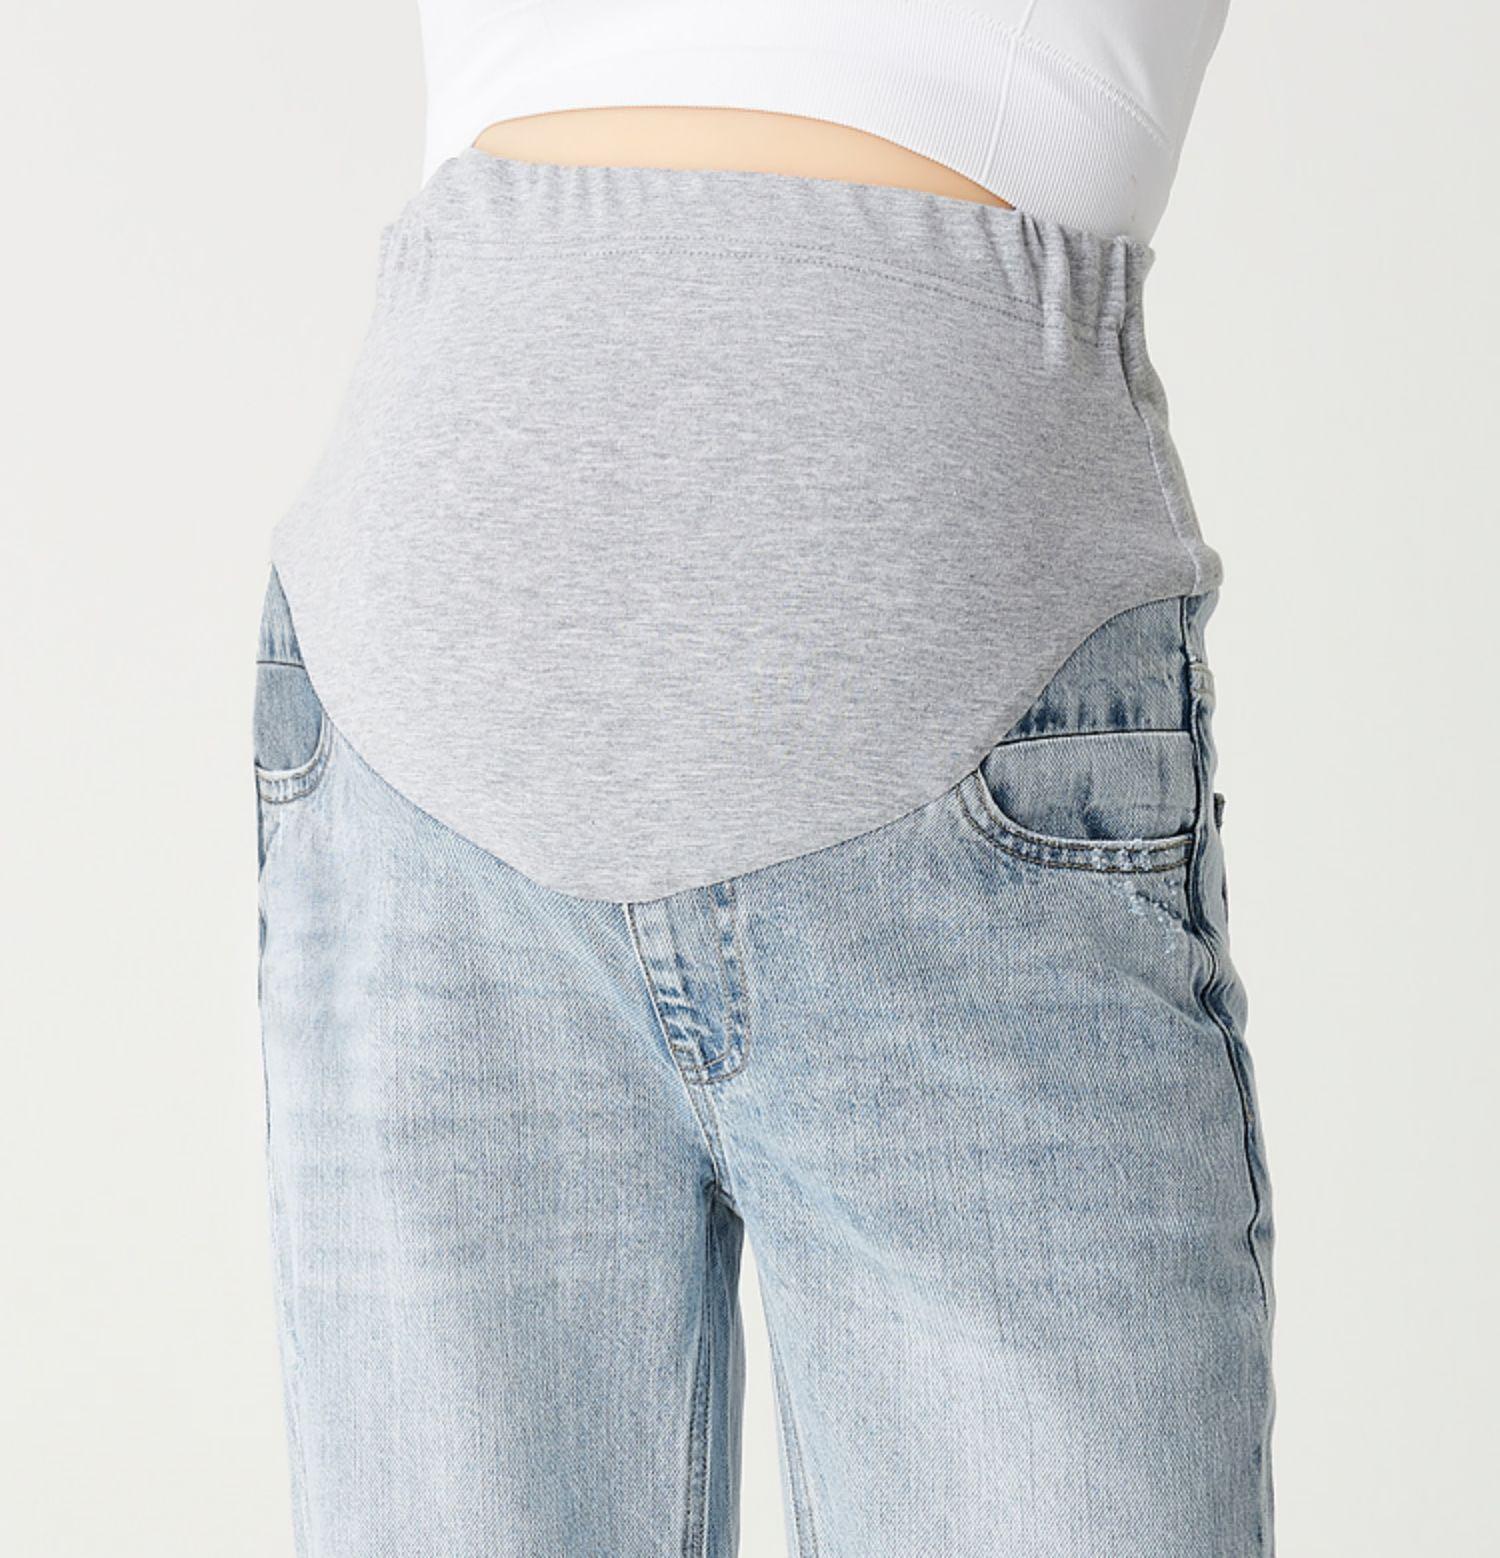 Maternity Jeans | Amazon.com